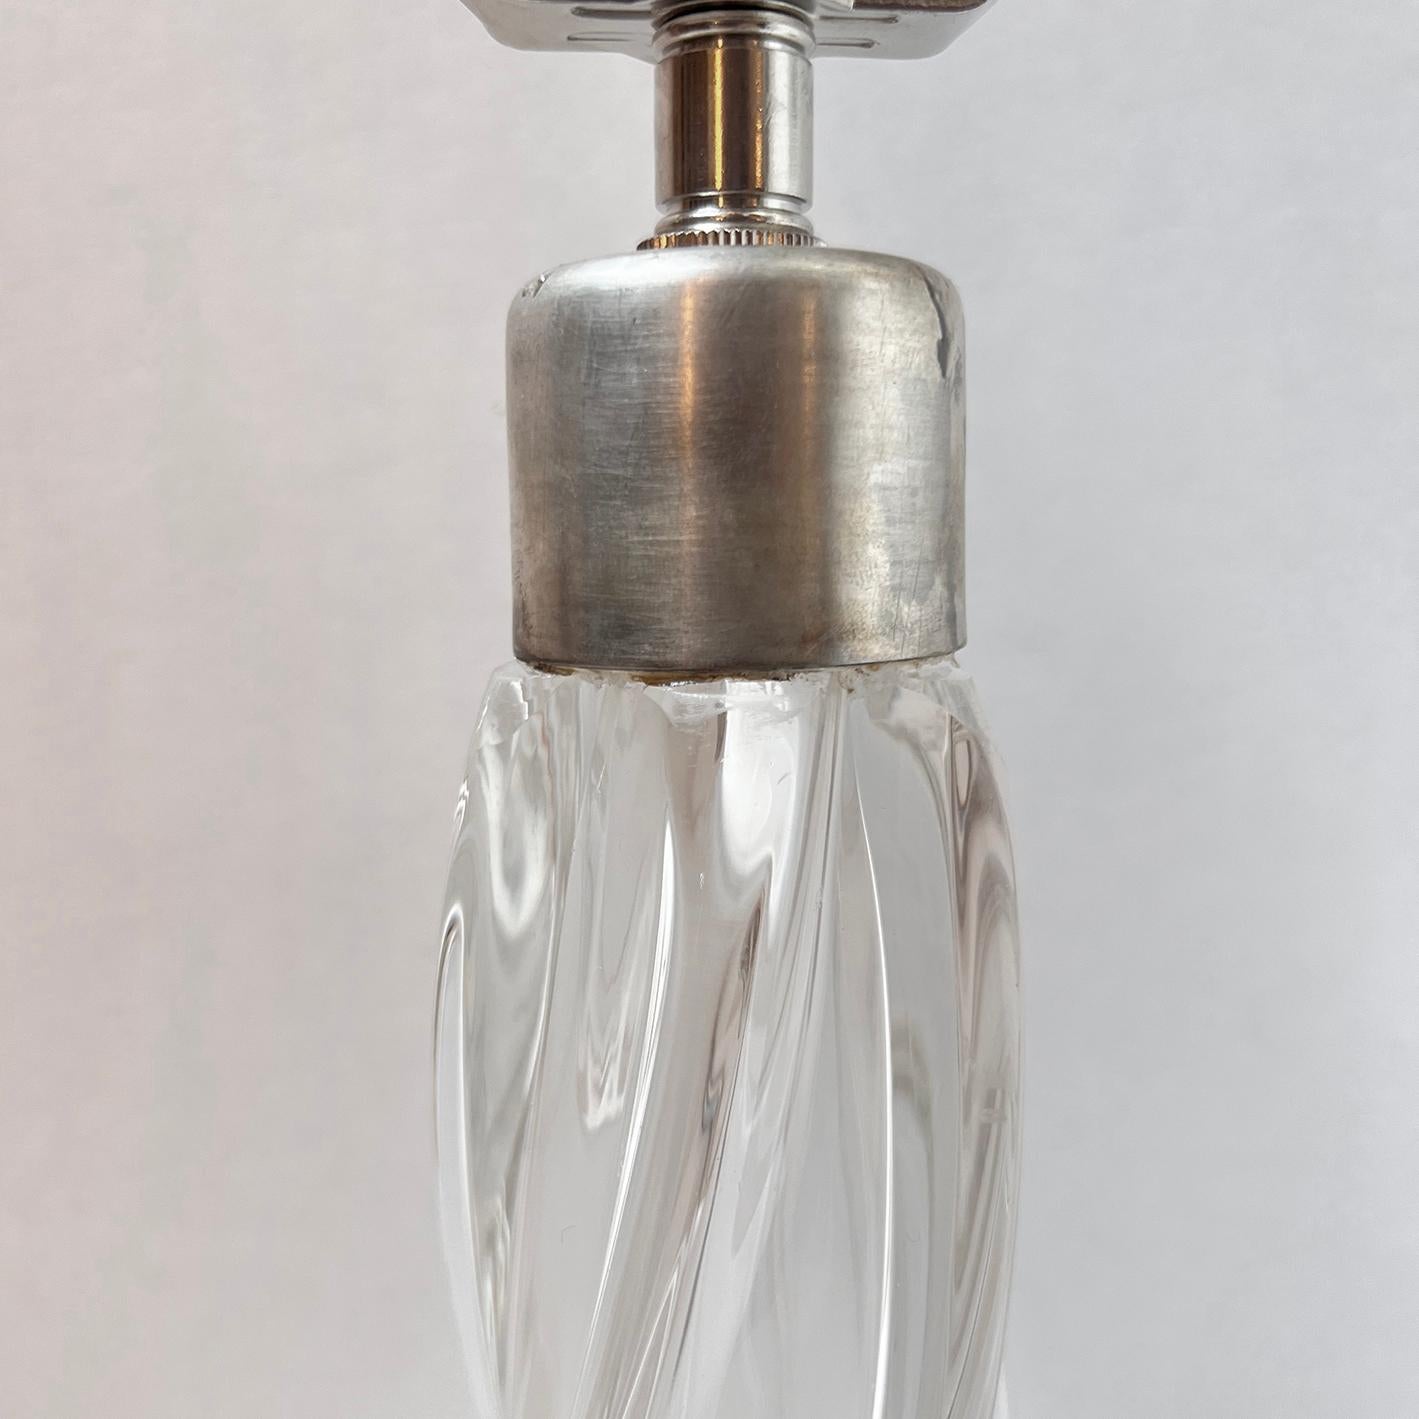 A single Italian circa 1930's clear Murano lamp.

Measurements:
Height of body: 12.5